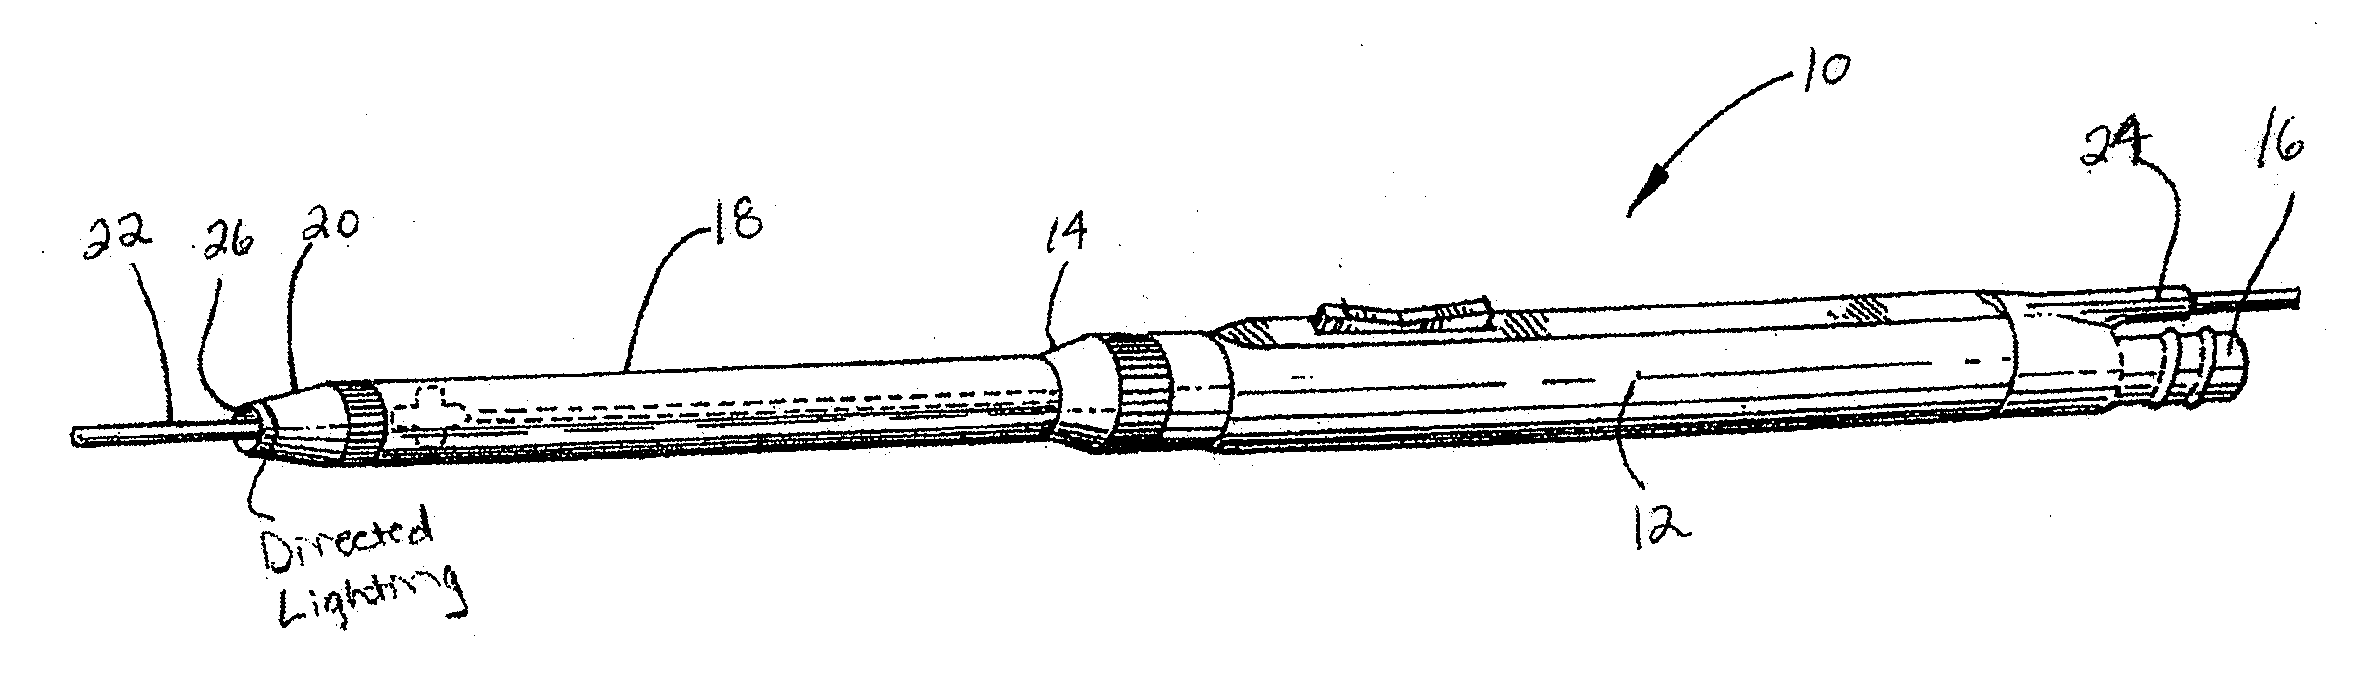 Electrosurgical unit pencil apparatus and shroud having directed illumination